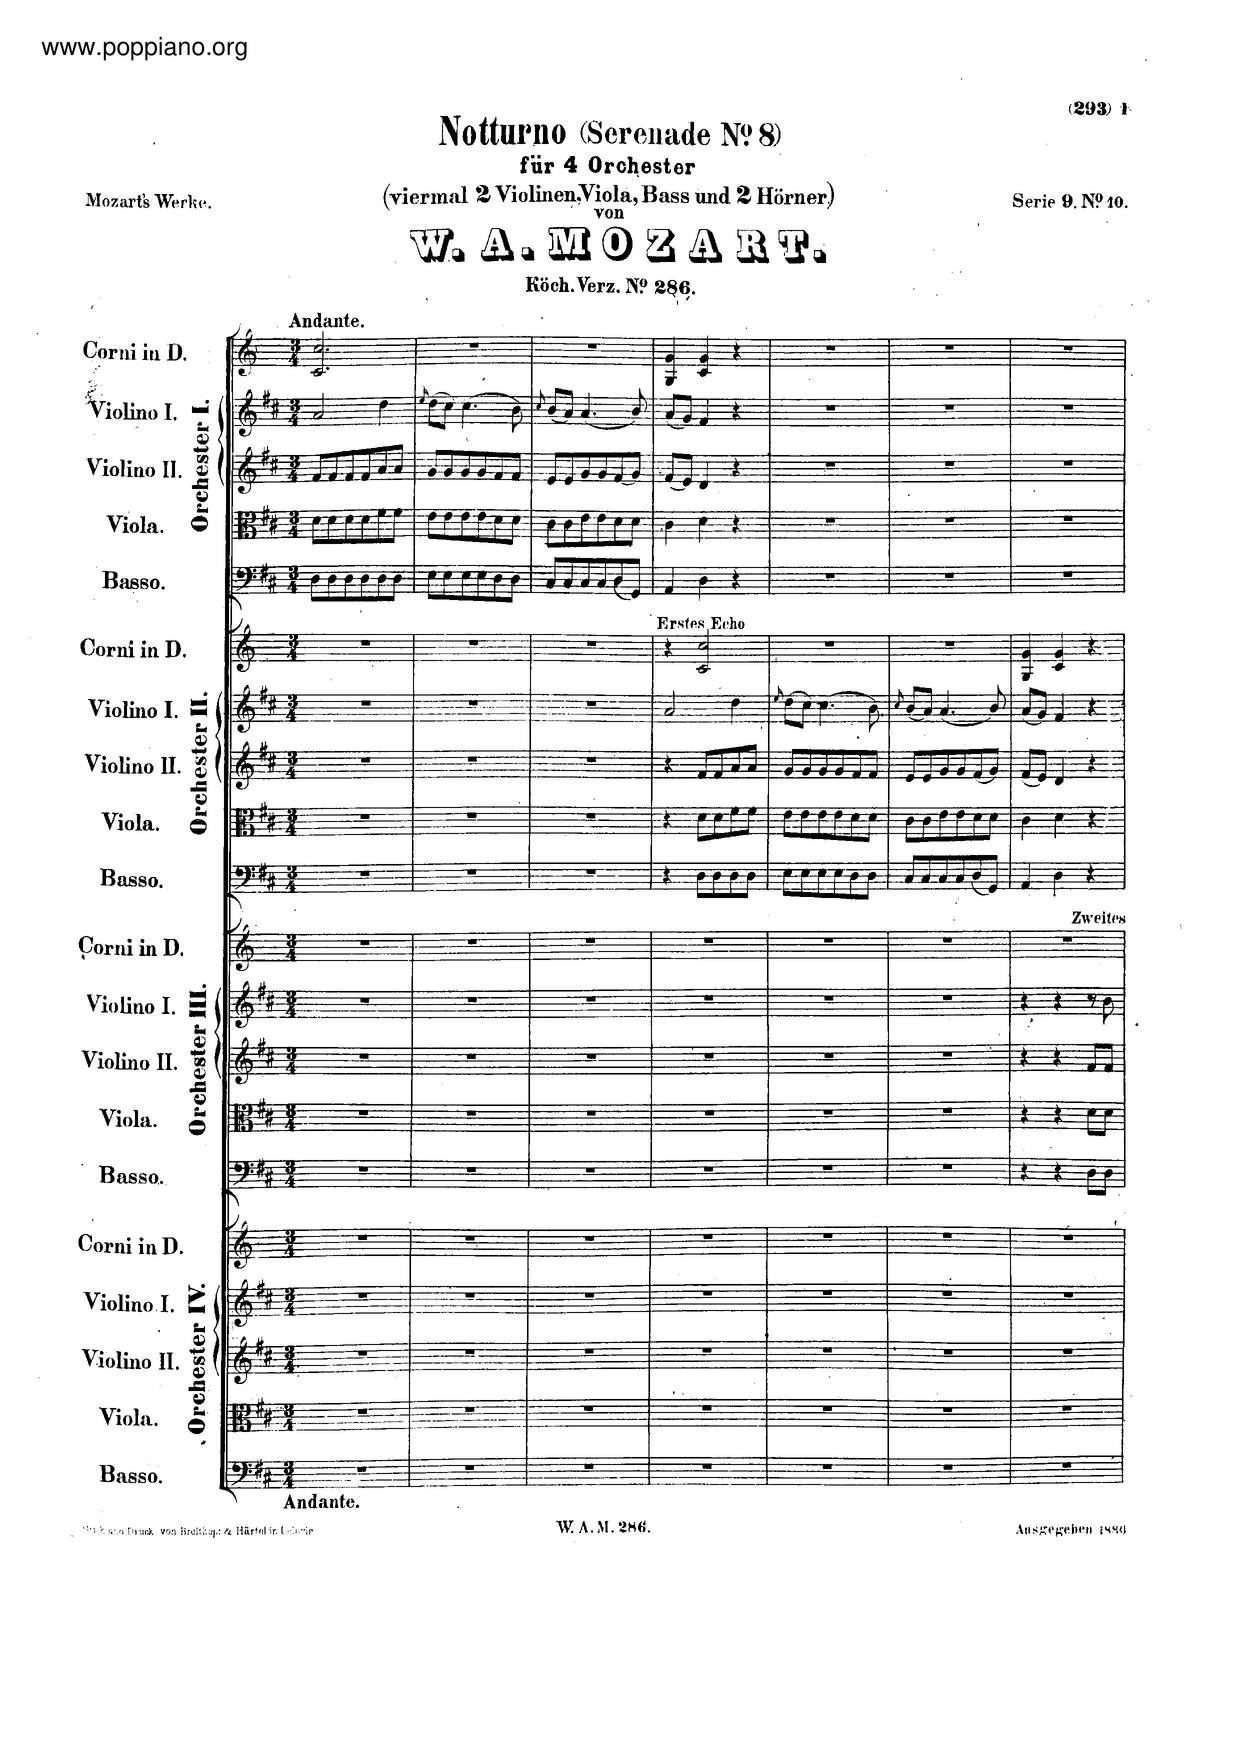 Notturno In D Major, K. 286/269A琴譜